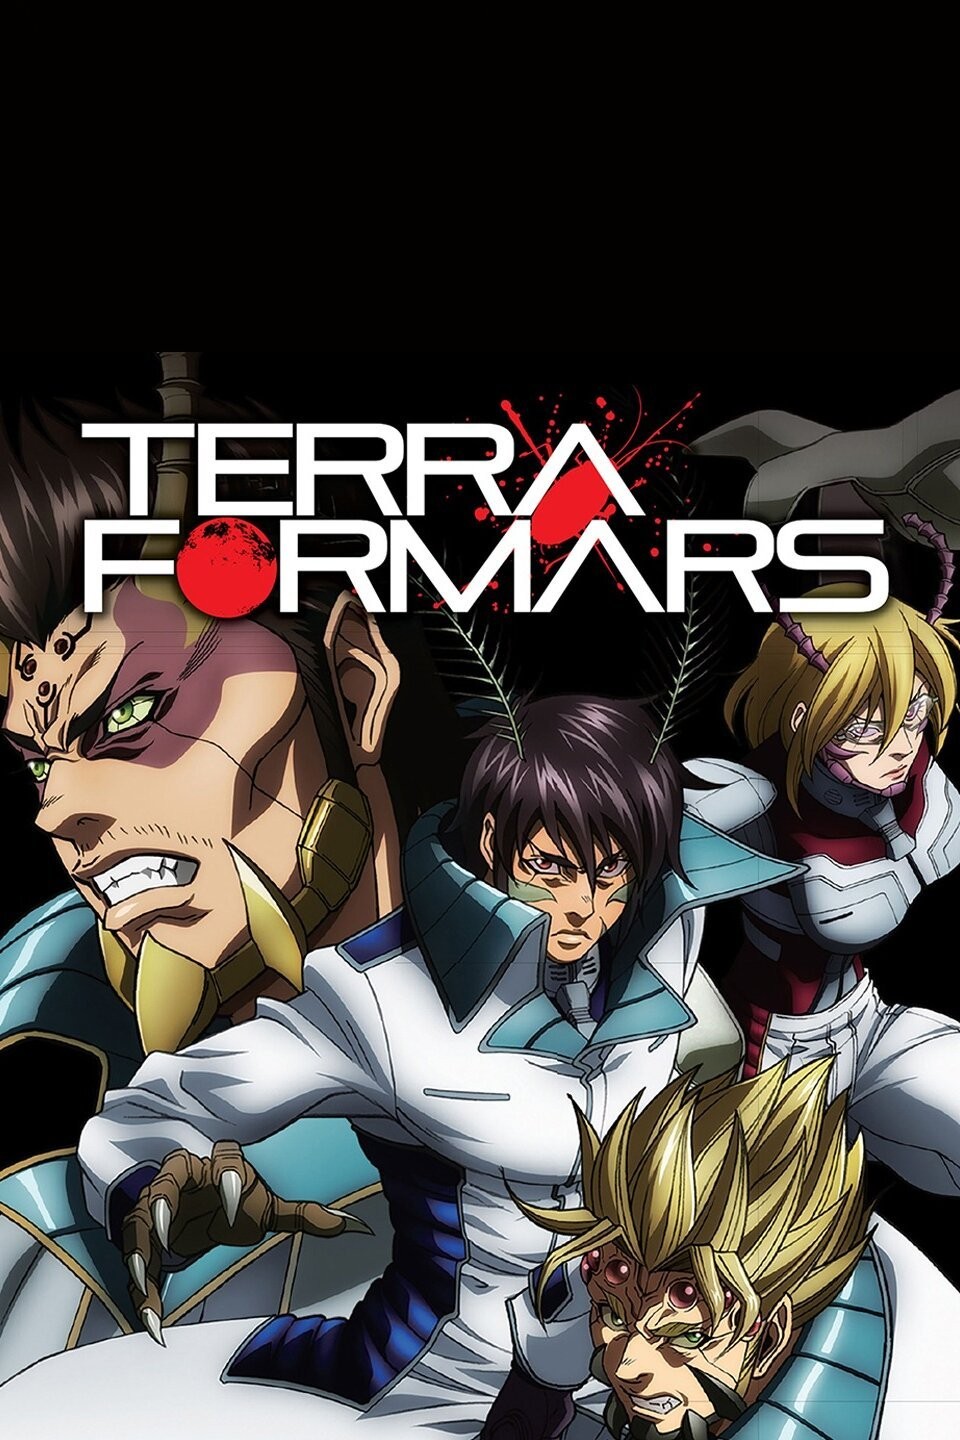 Terra Formars - Terra Formars Episode 5 is now available on Crunchyroll! -  http://www.crunchyroll.com/terraformars/episode-5-exceptional-two-661215?utm_campaign=terra&utm_source=fbfp  | Facebook